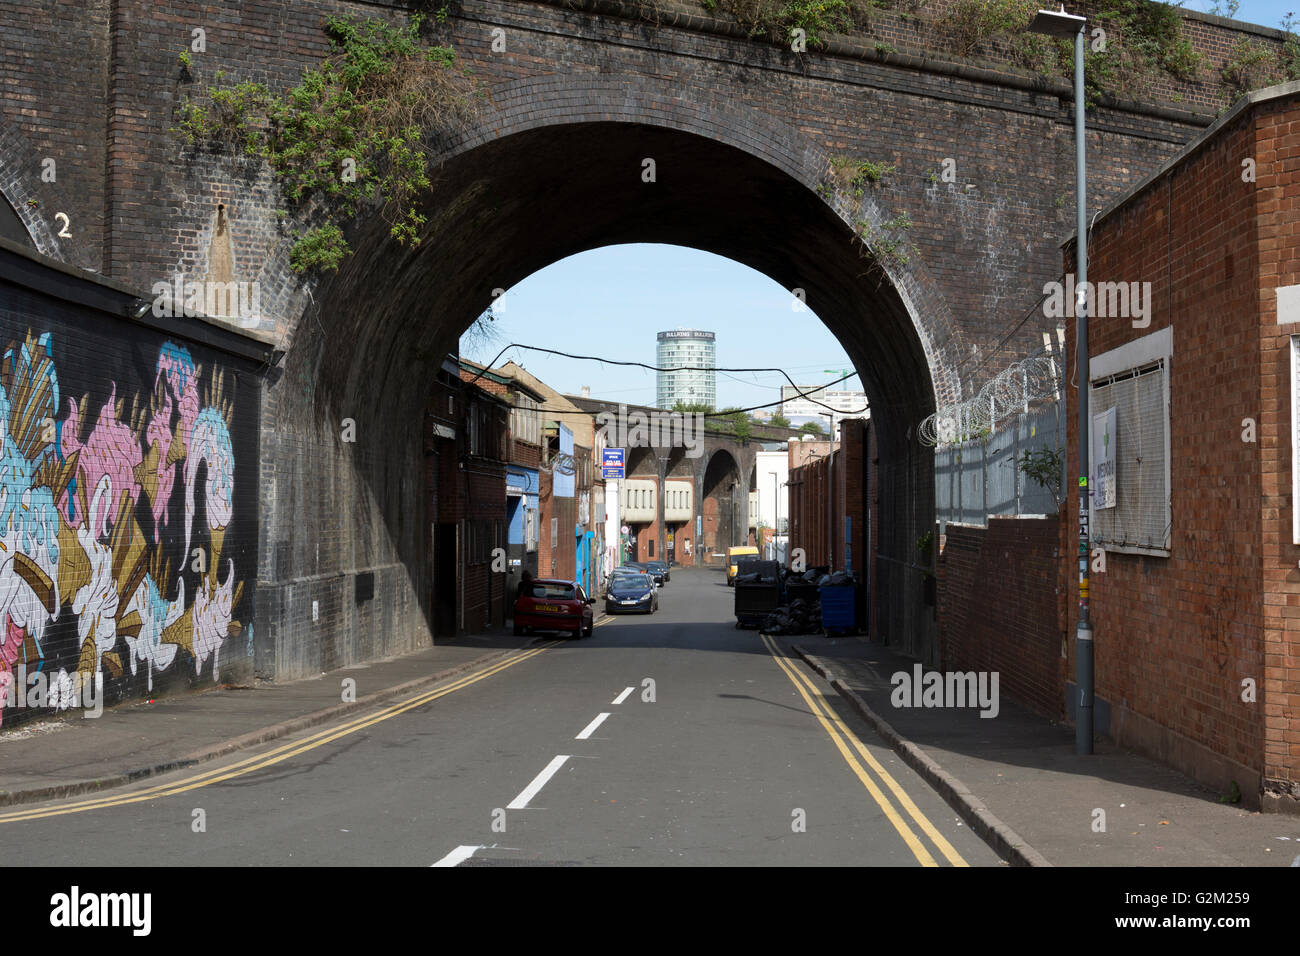 A railway arch at Lower Trinity Street, Digbeth, Birmingham, UK Stock Photo